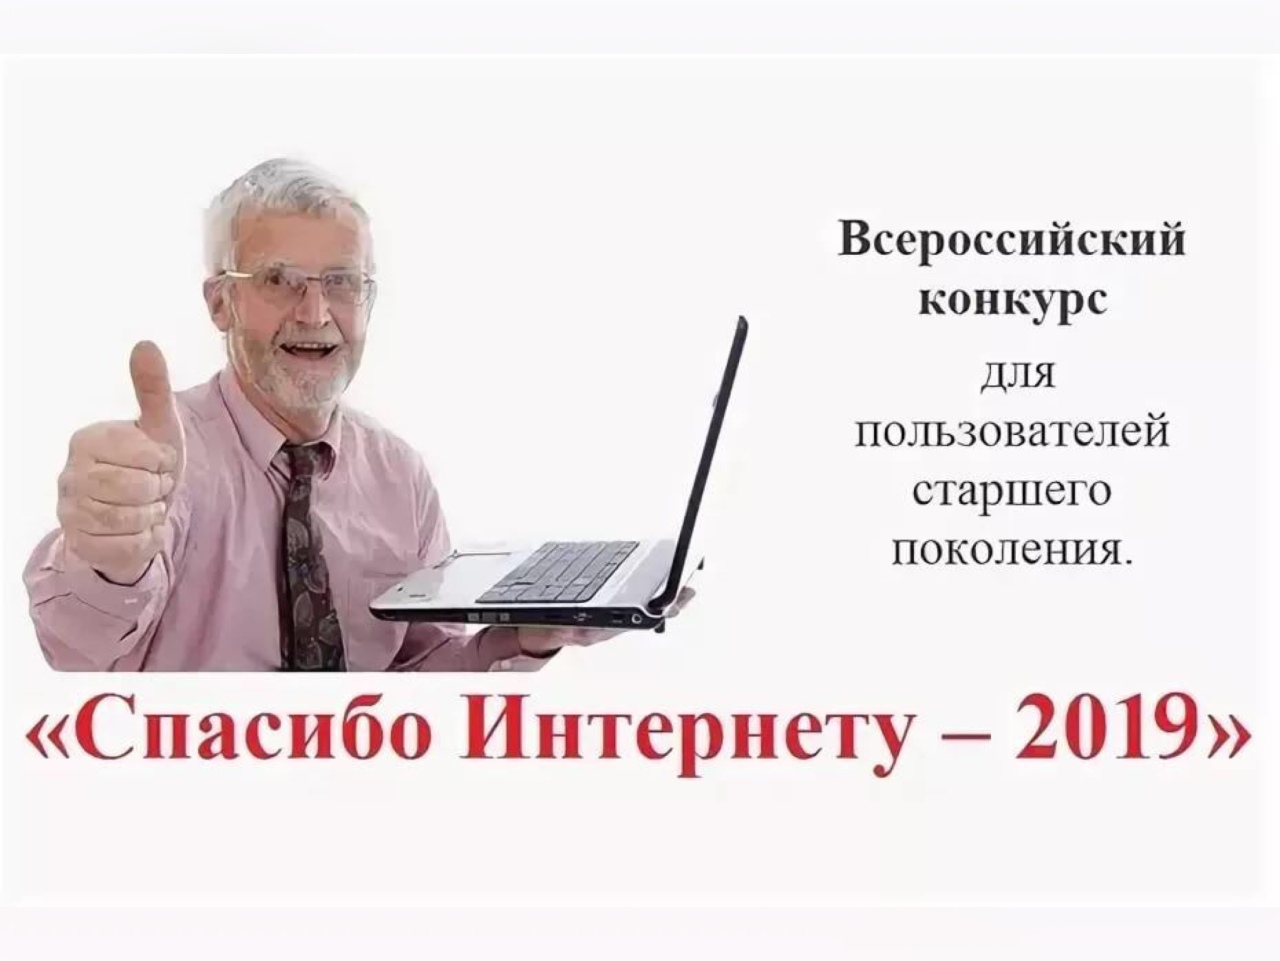 Всероссийский конкурс спасибо интернету